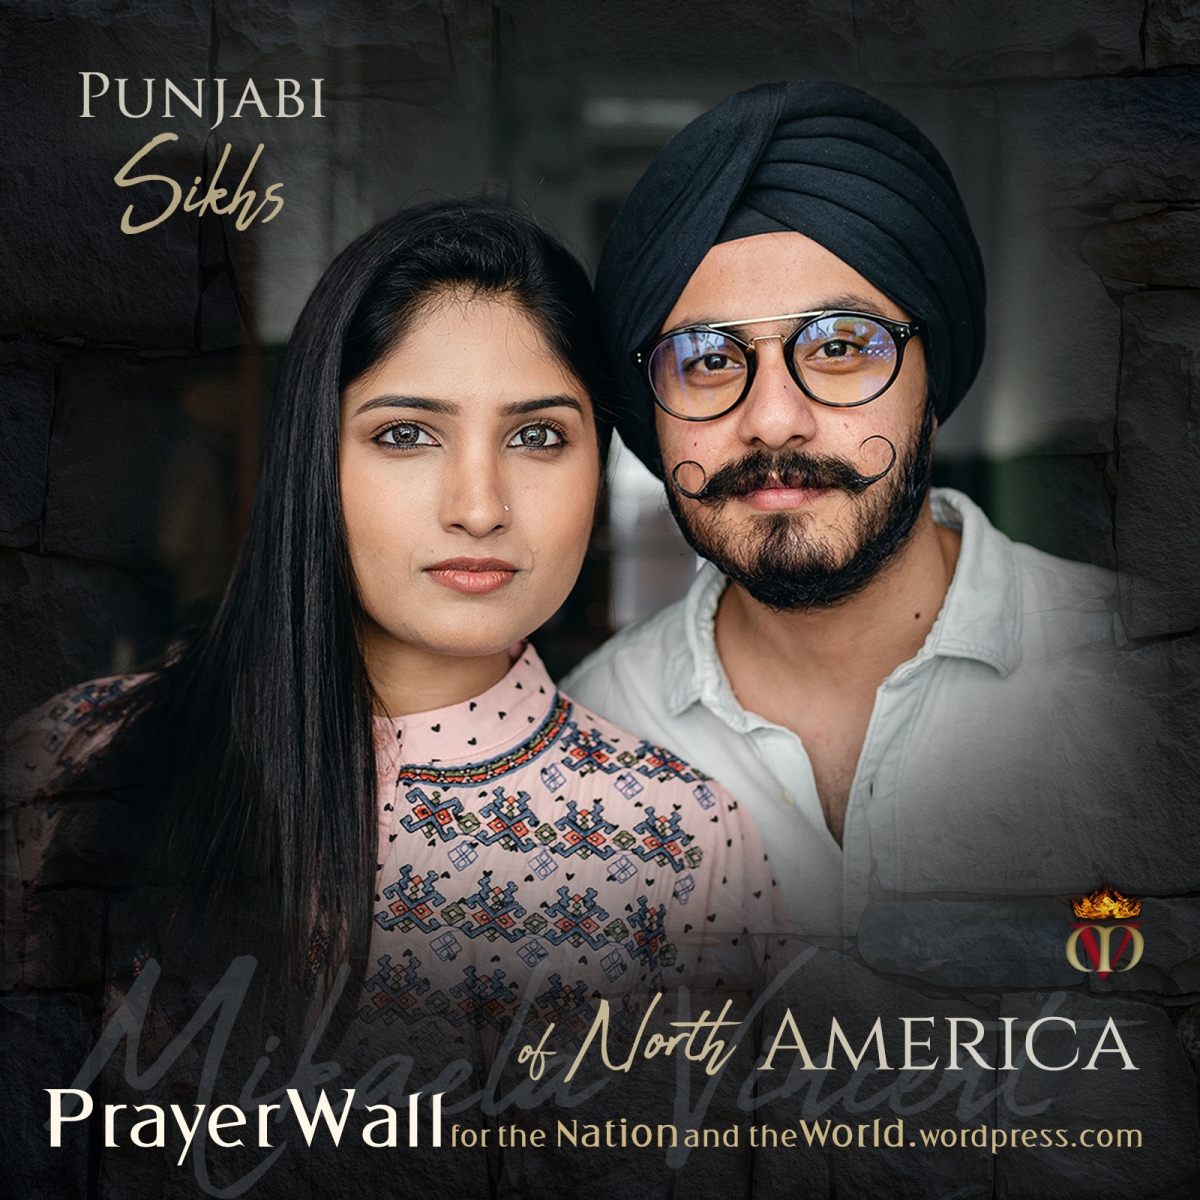 Punjabi Sikhs of North America